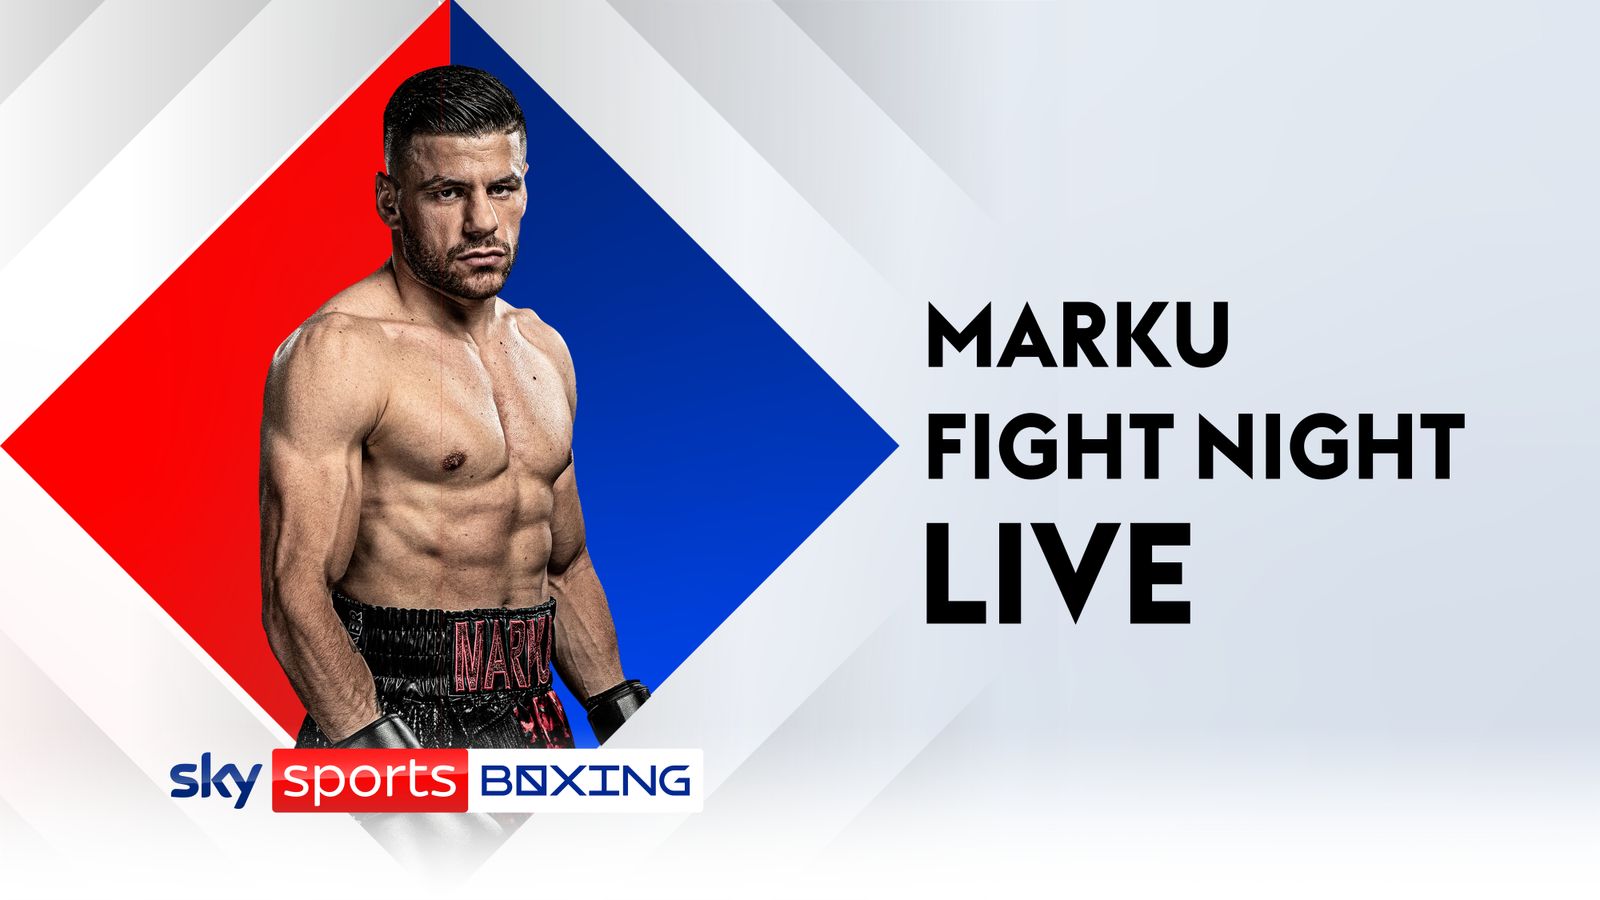 florian marku fight tonight live stream free